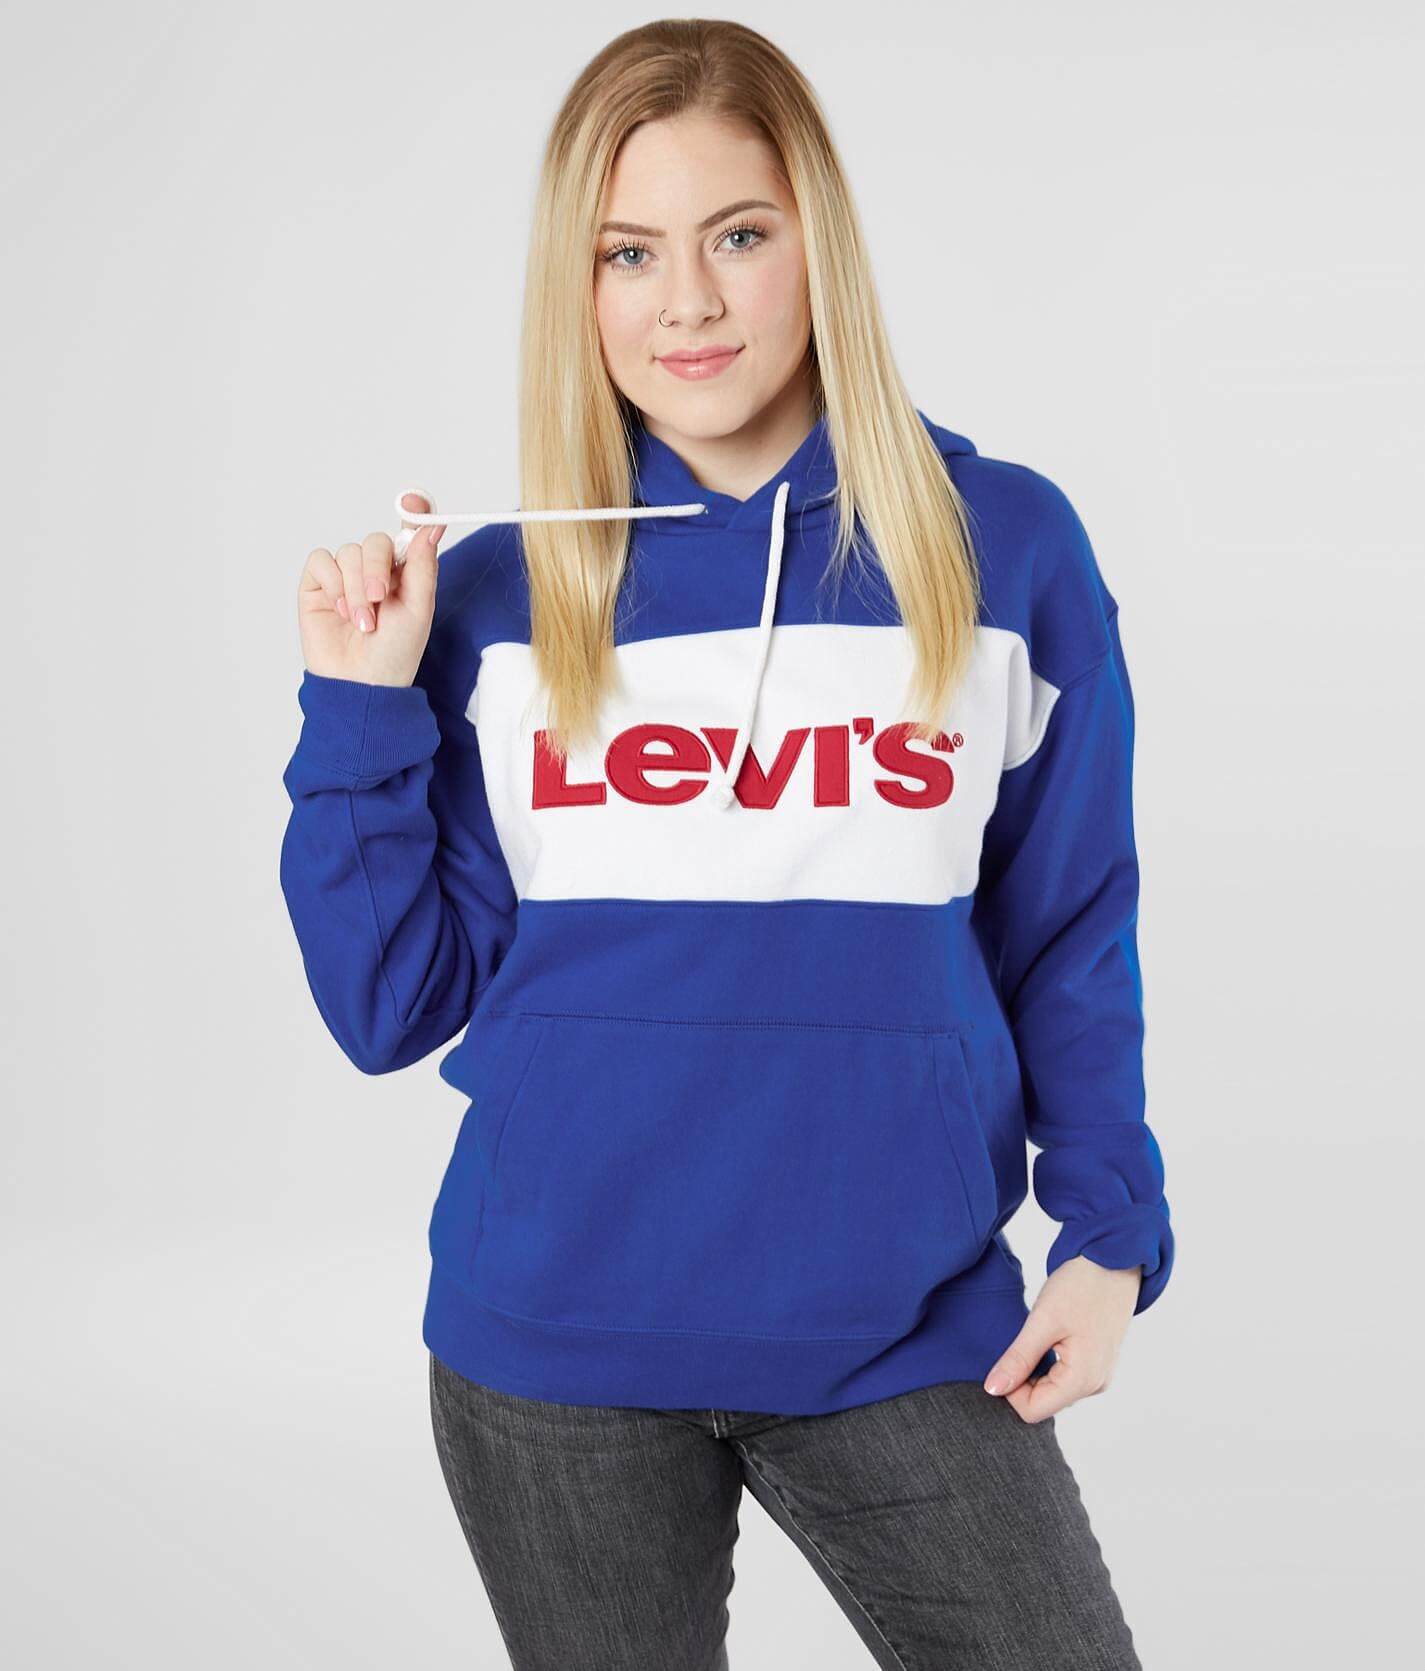 levis blue sweatshirt